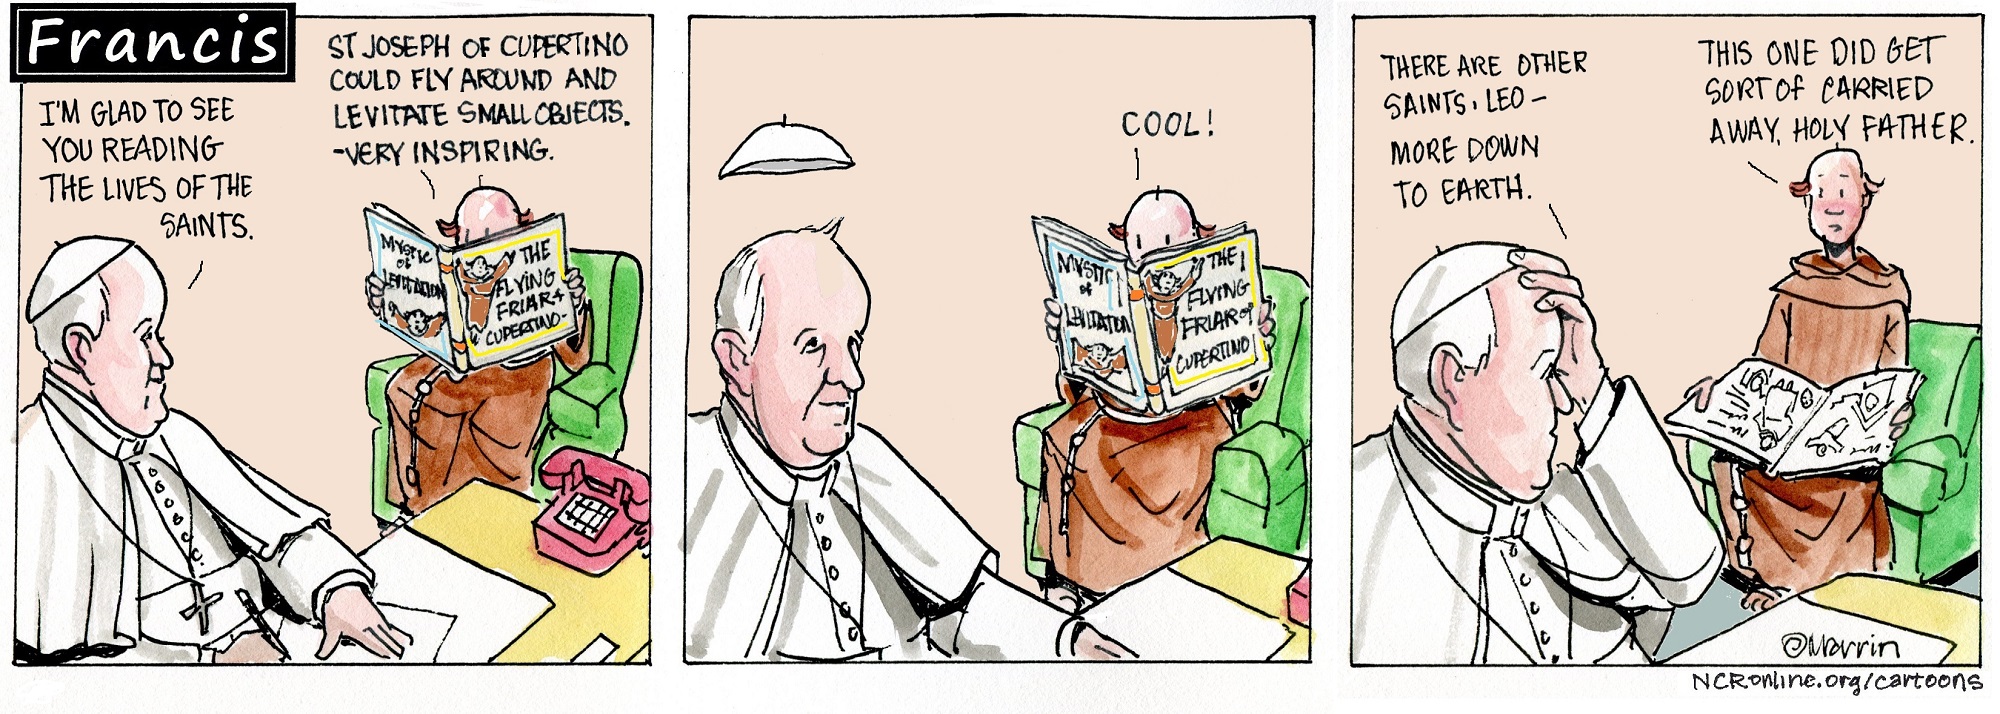 Francis, the comic strip | National Catholic Reporter